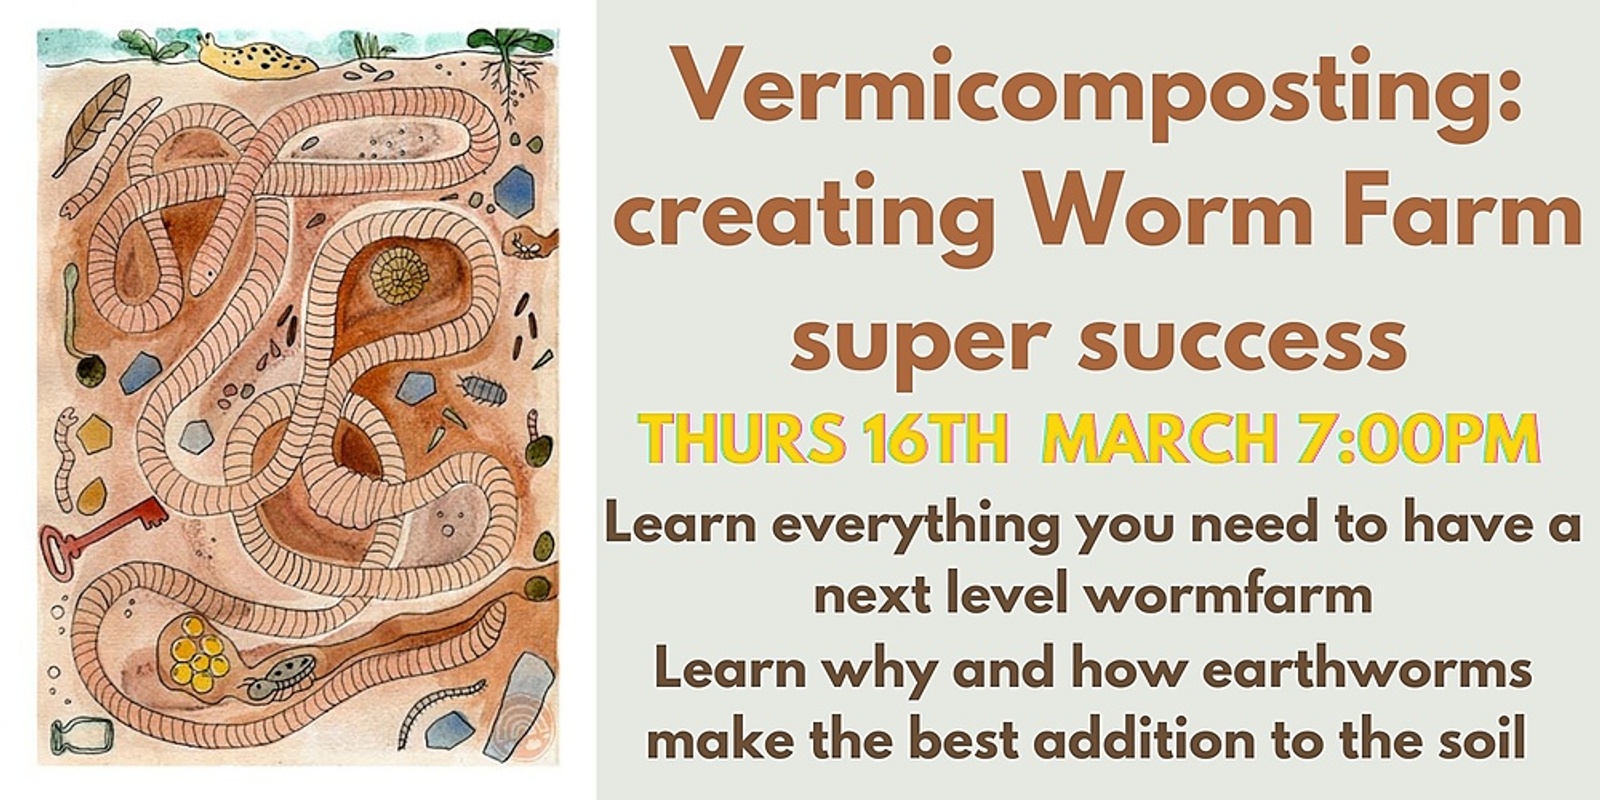 Vermicomposting; creating Worm Farm super success